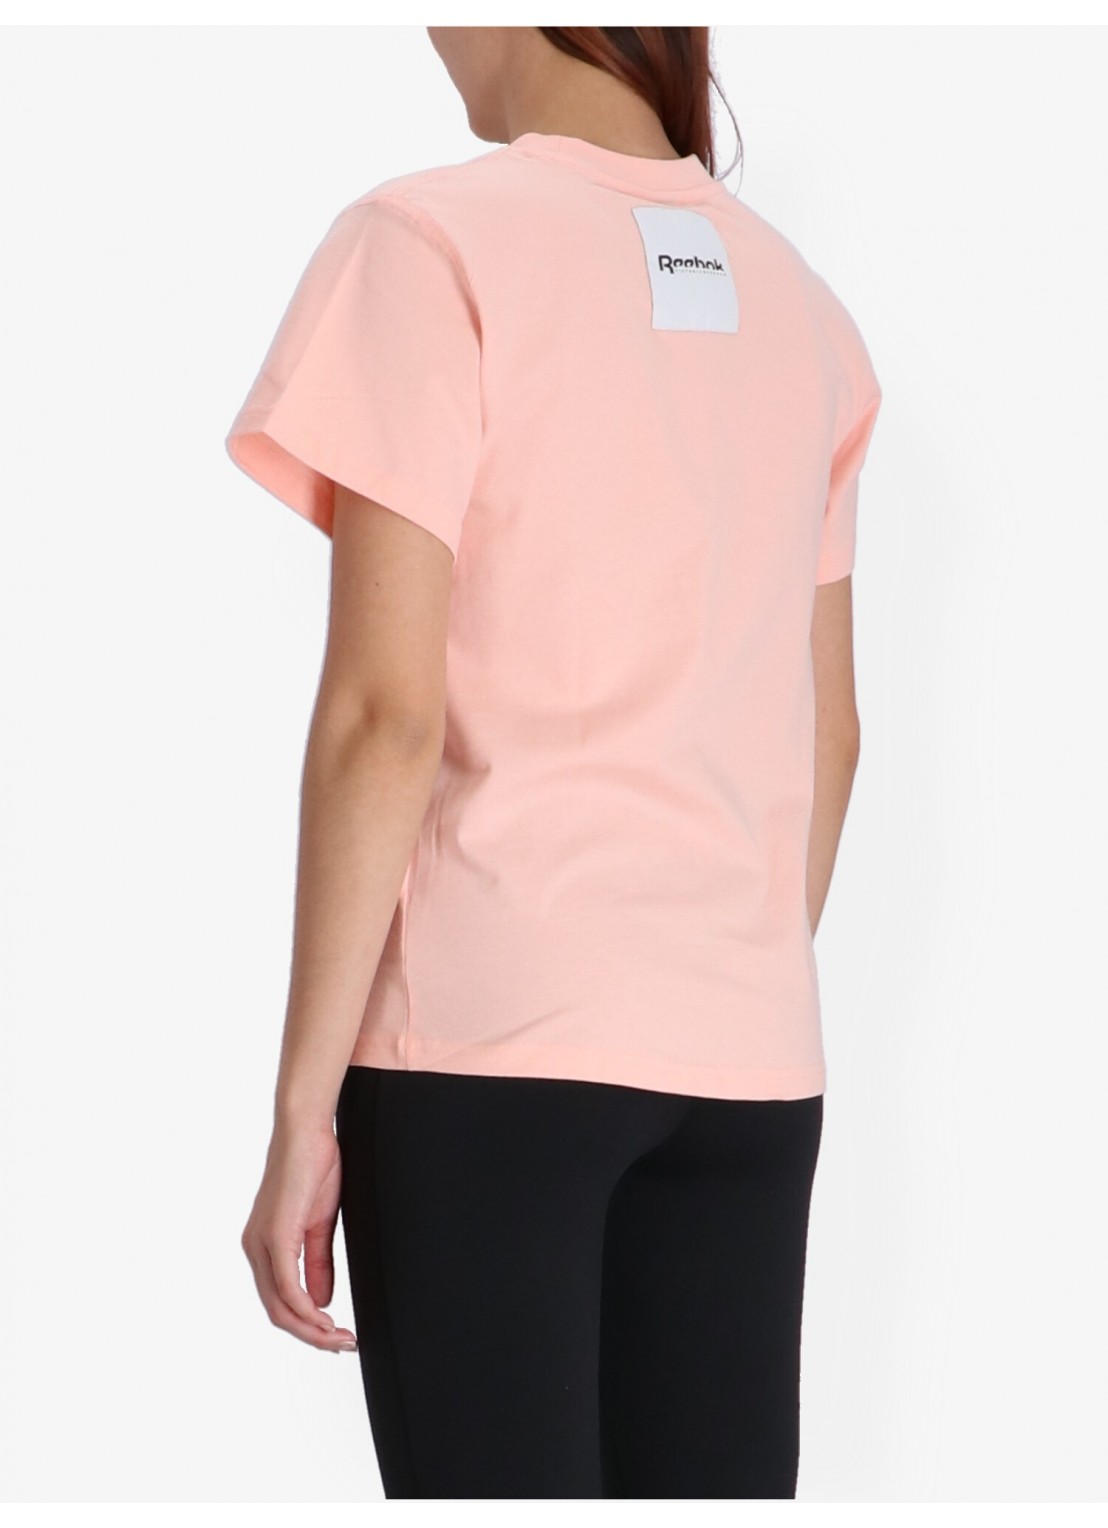 reebok by victoria beckham rbk vb t-shirt - hf8483 coralglow Talla XS